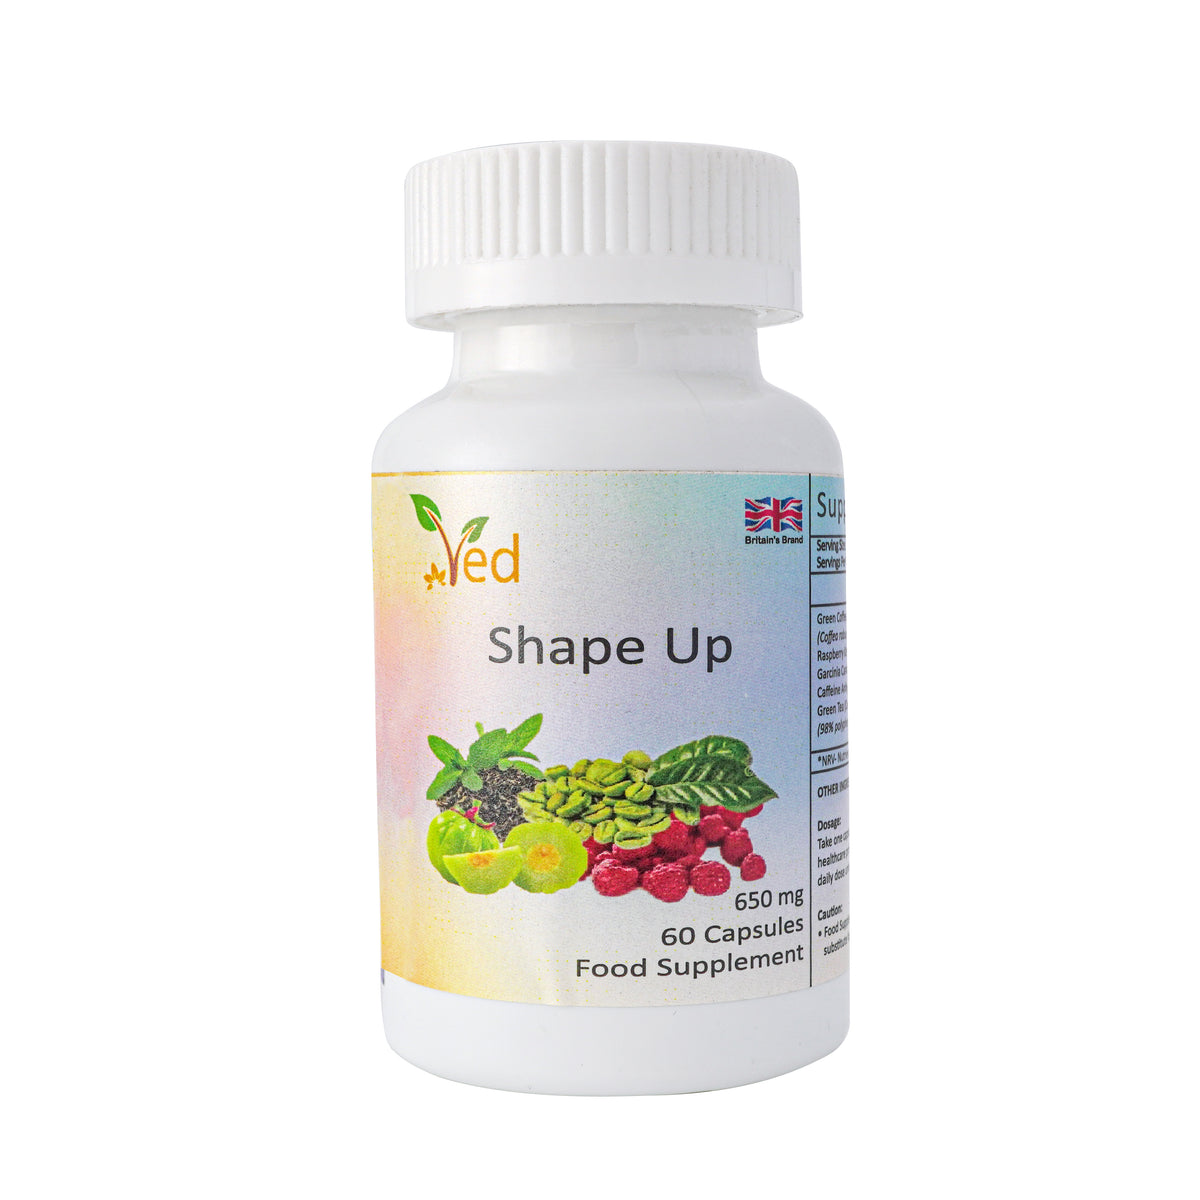 Shape Up 650 mg Per Capsule 60 Capsule (60 Days Supply)